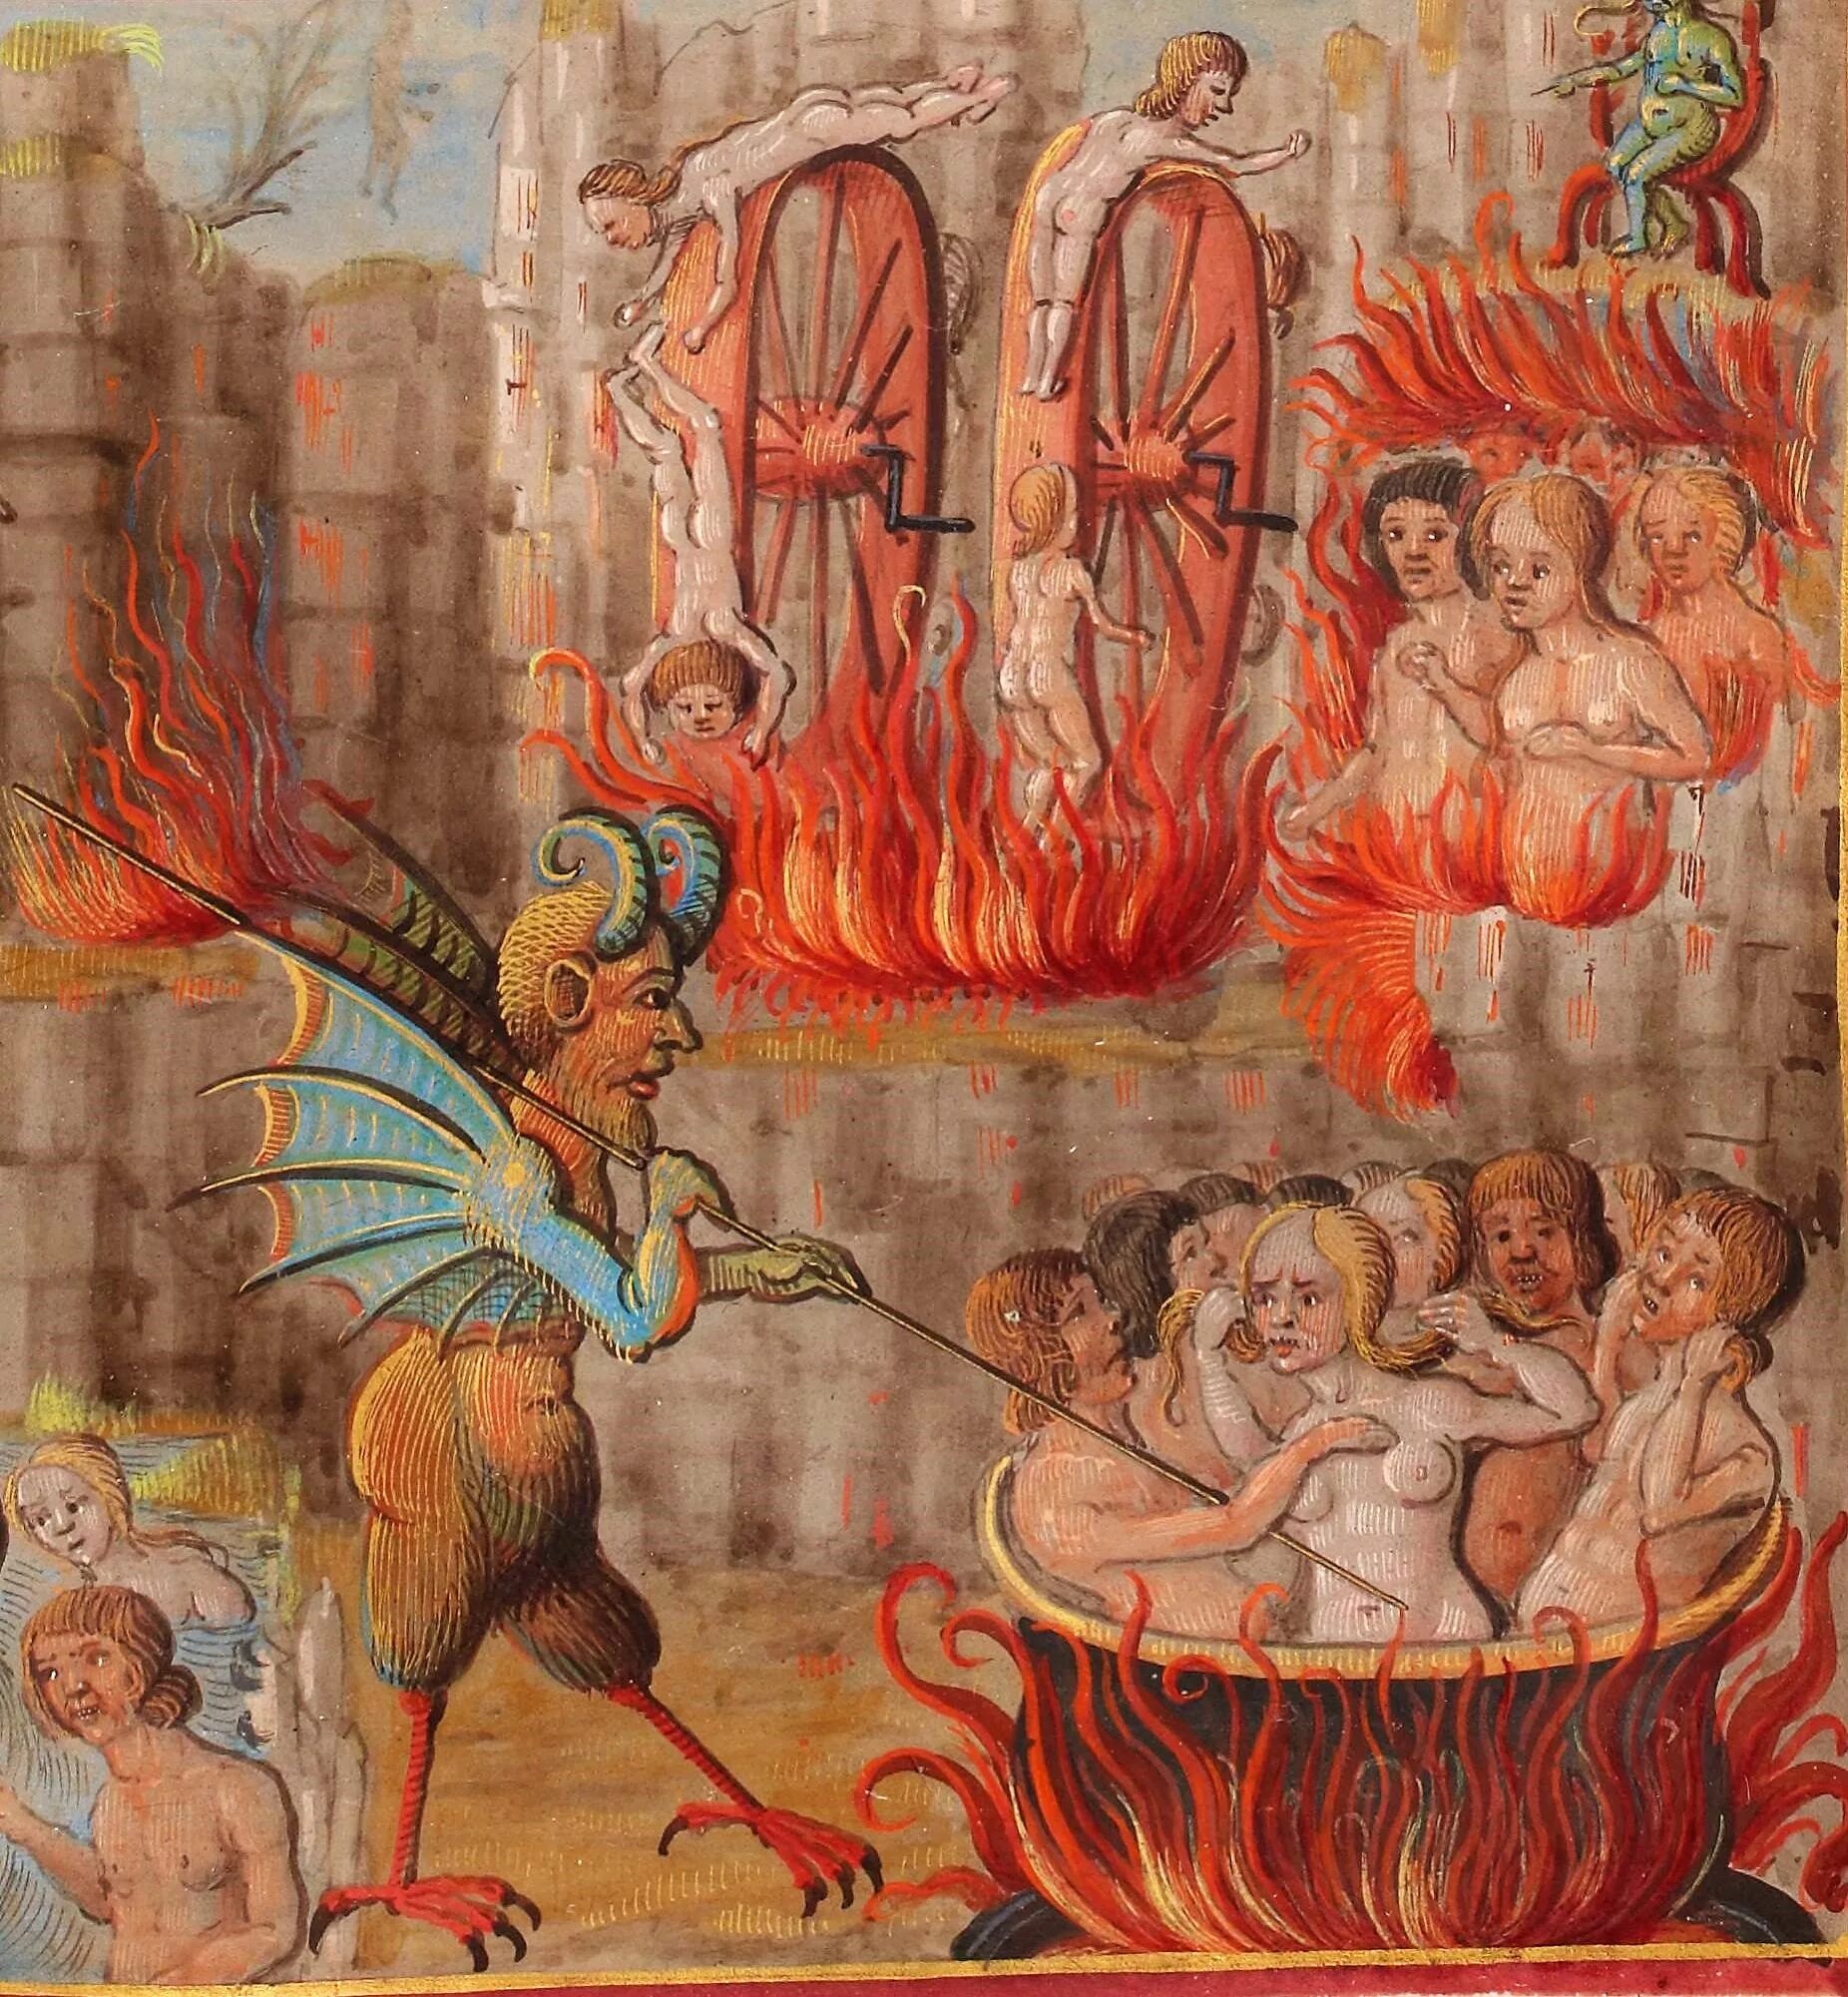 Души грешников. Муки ада в средневековой миниатюре.. Картина "мучения ада" Босх. Фреска Джованни да Модена ад.